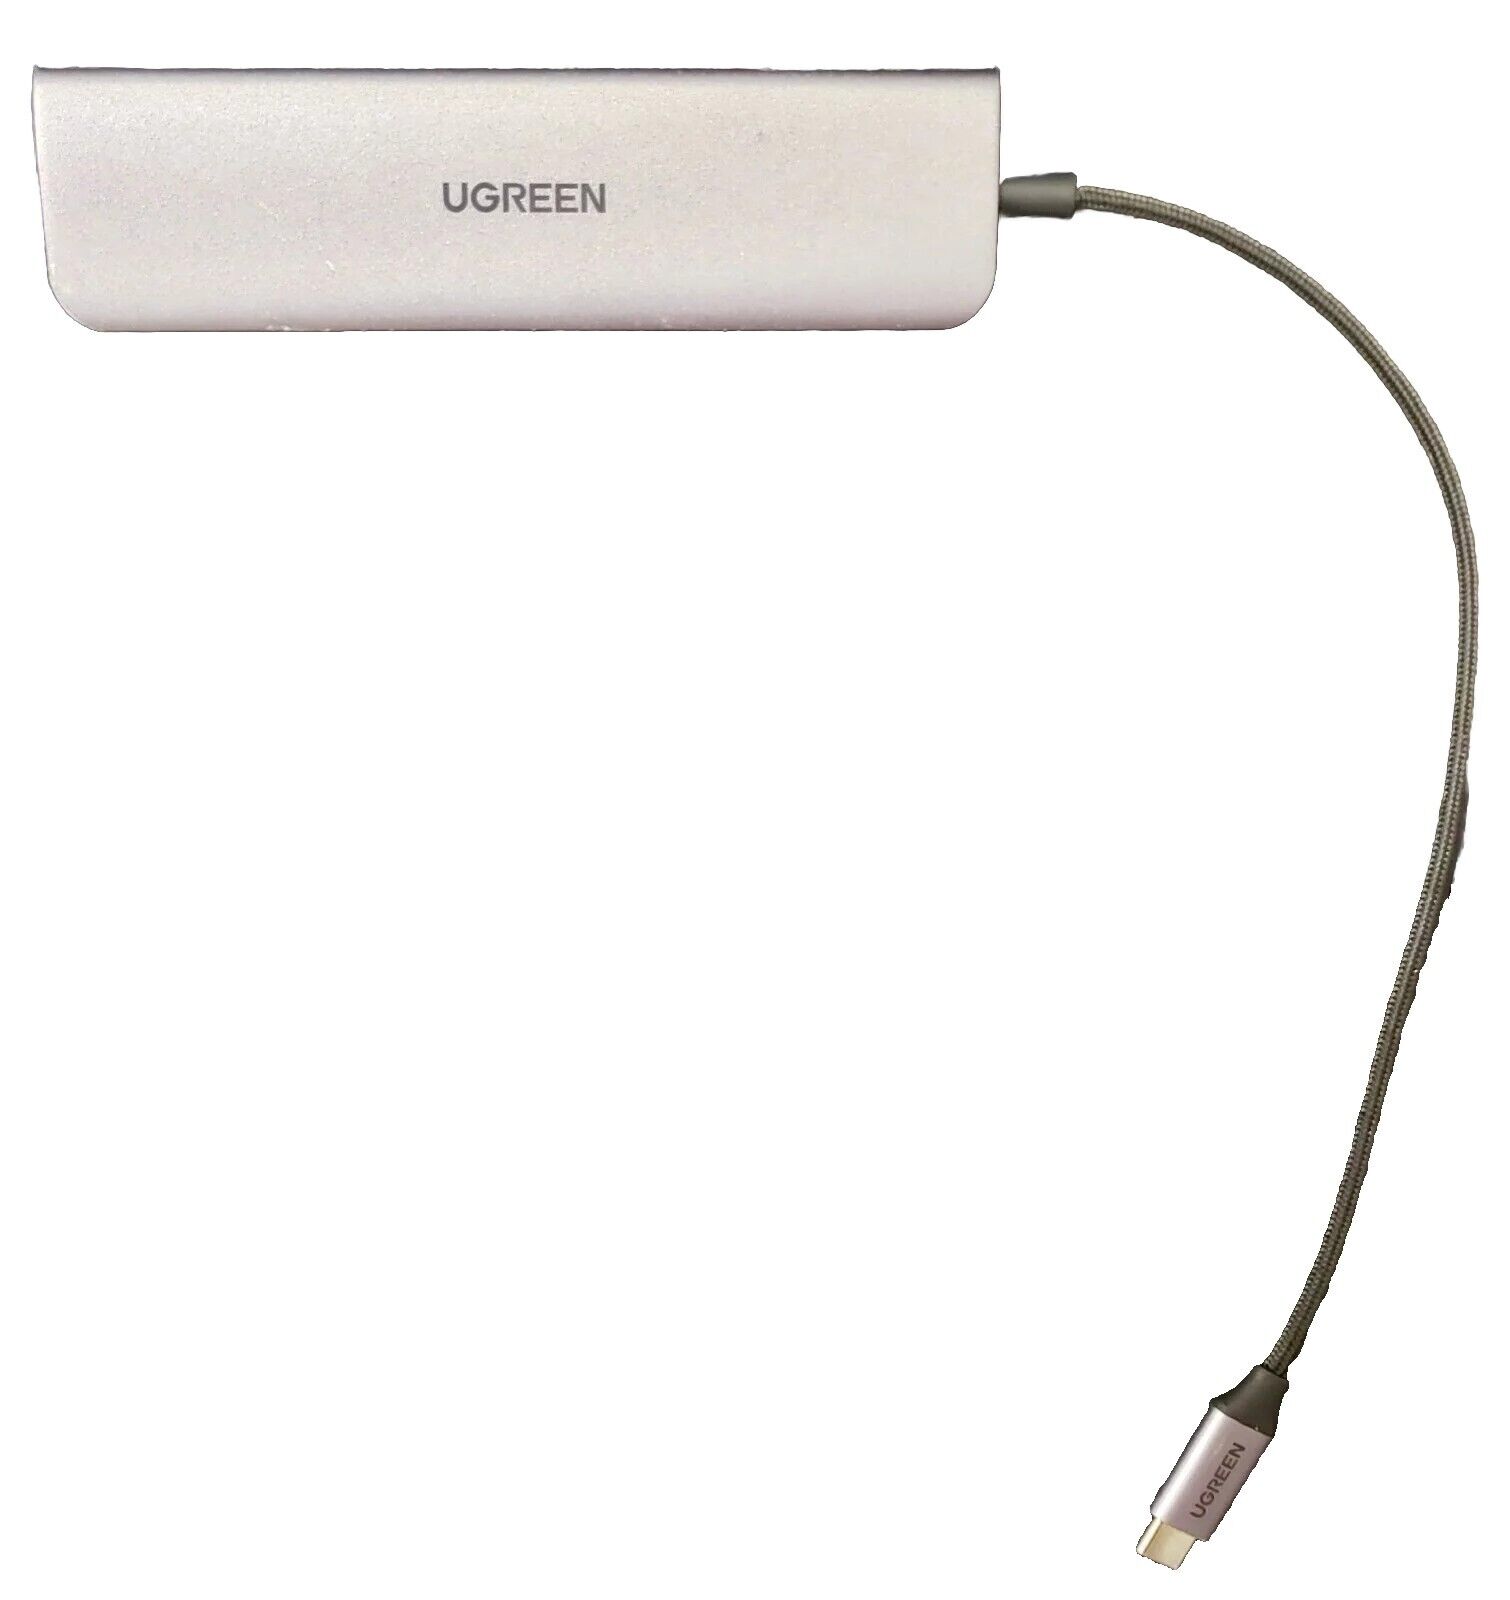 UGREEN - USB (C) 3.0 Ethernet | Adapter 4 In 1 Multiport Hub W/3 x USB + SD Card